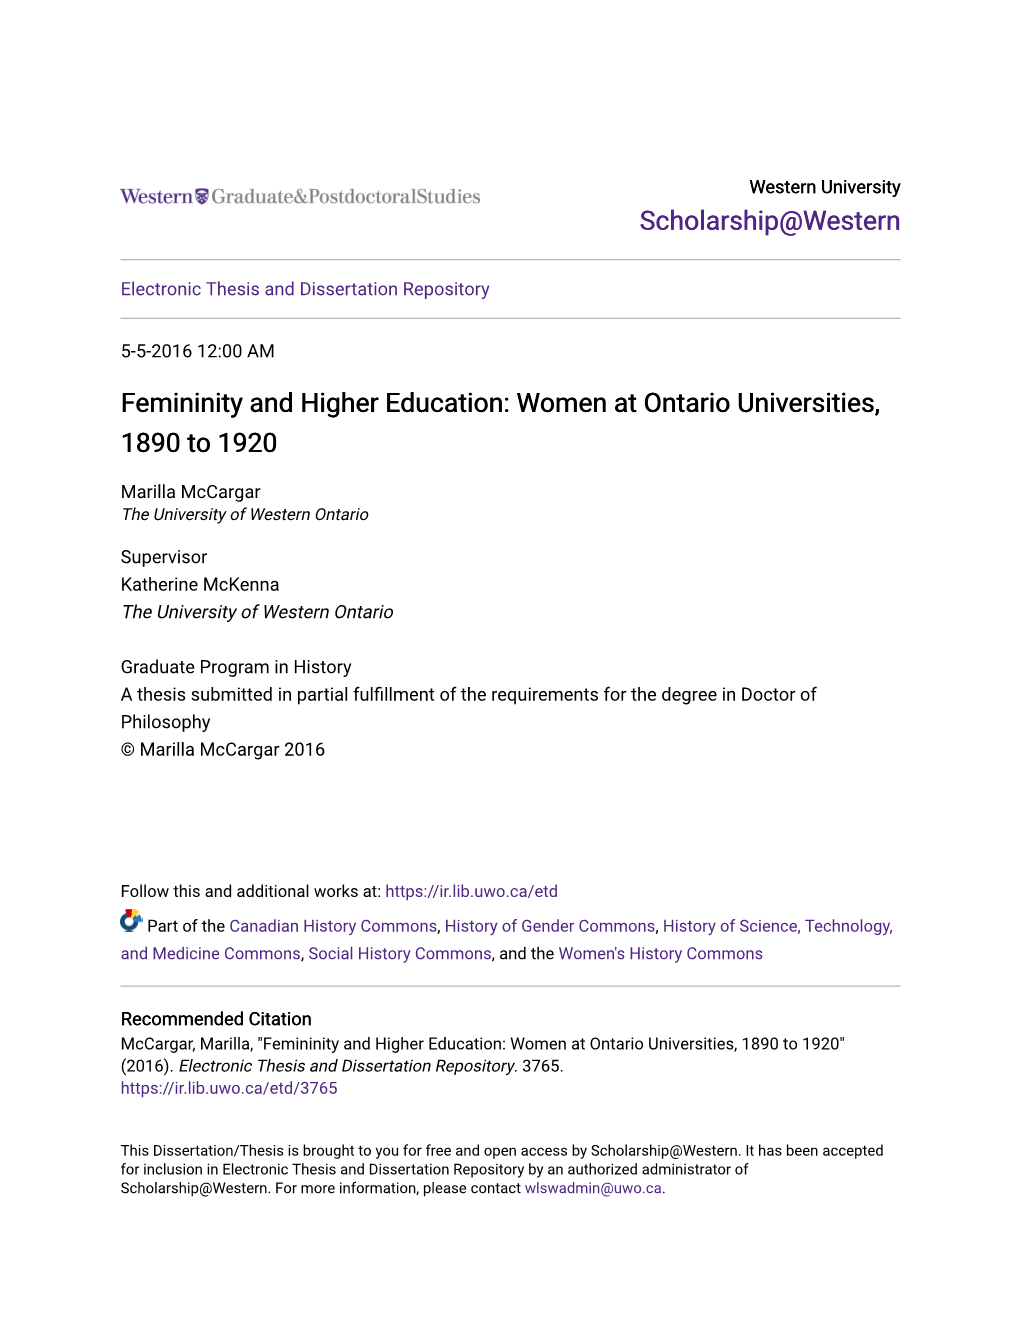 Femininity and Higher Education: Women at Ontario Universities, 1890 to 1920